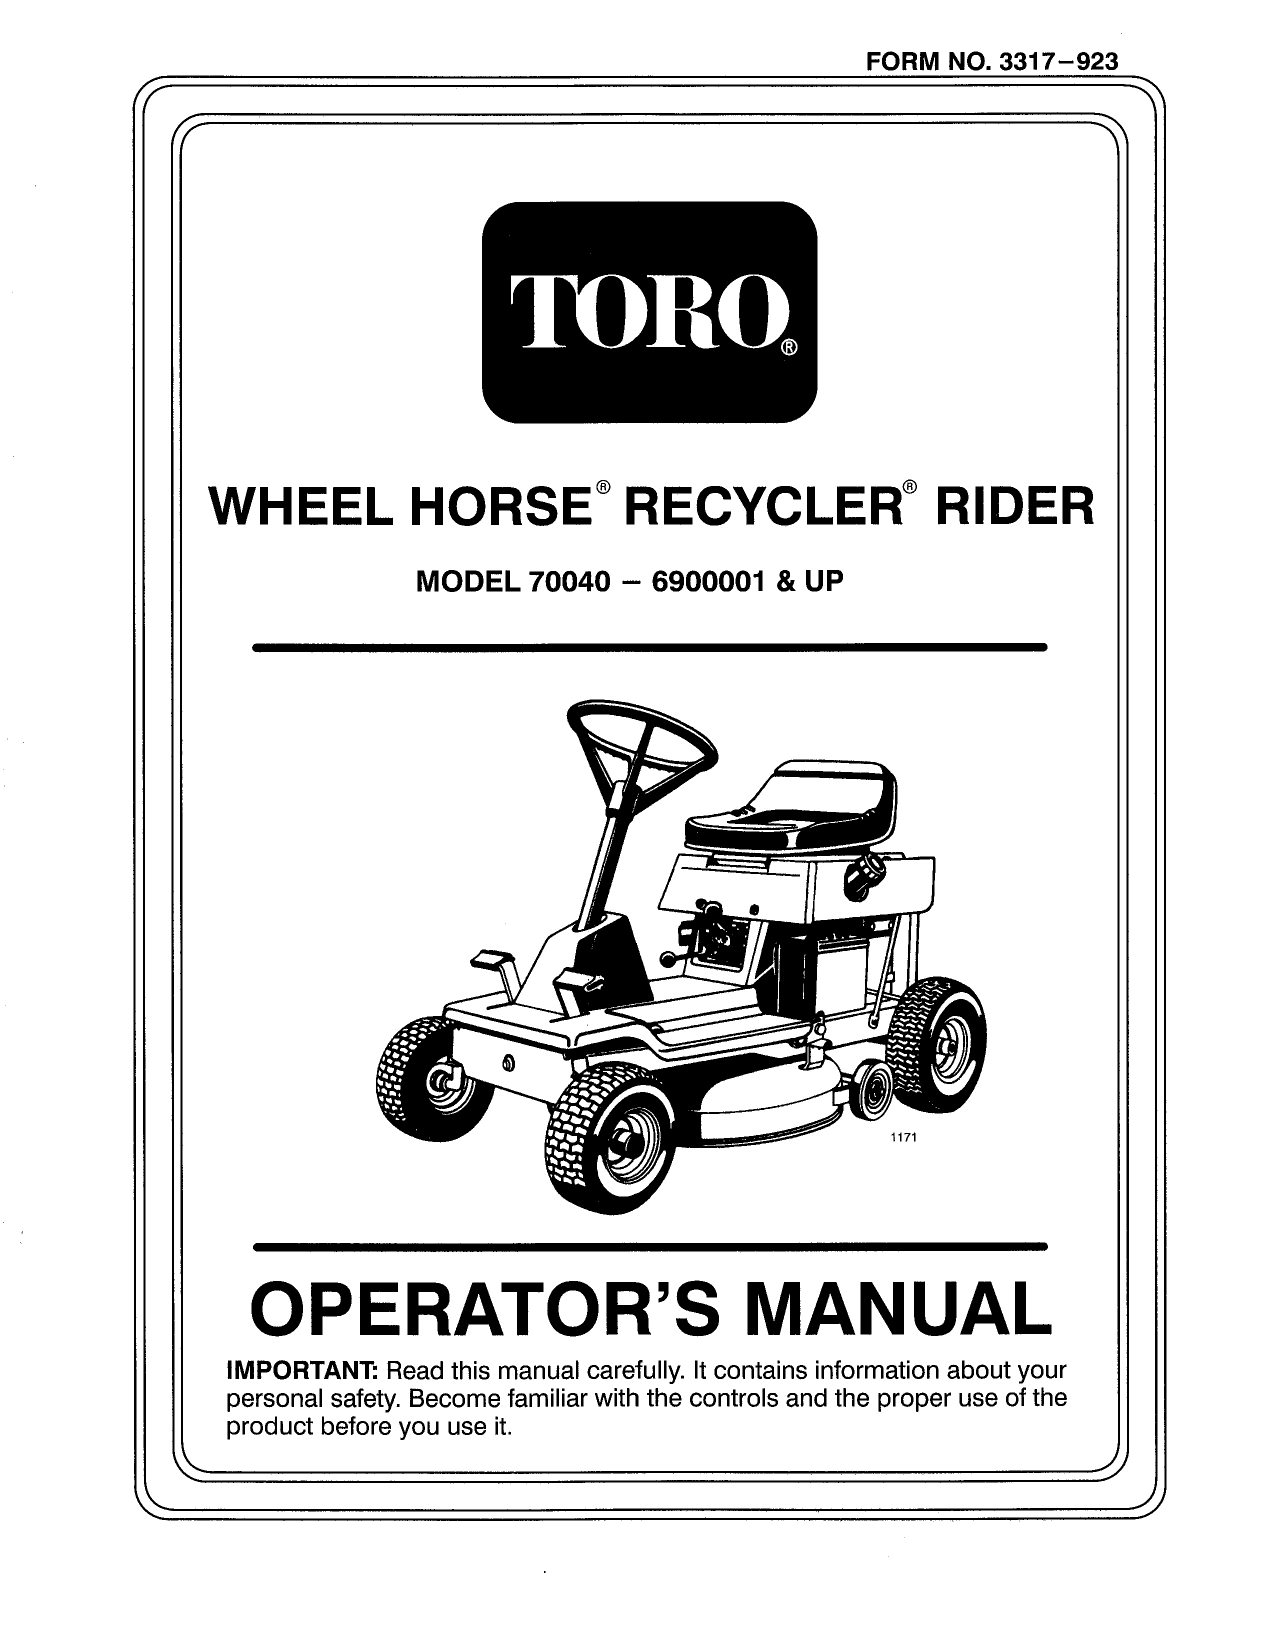 Toro Riding Lawn Mower Wiring Diagram - Search Best 4K Wallpapers